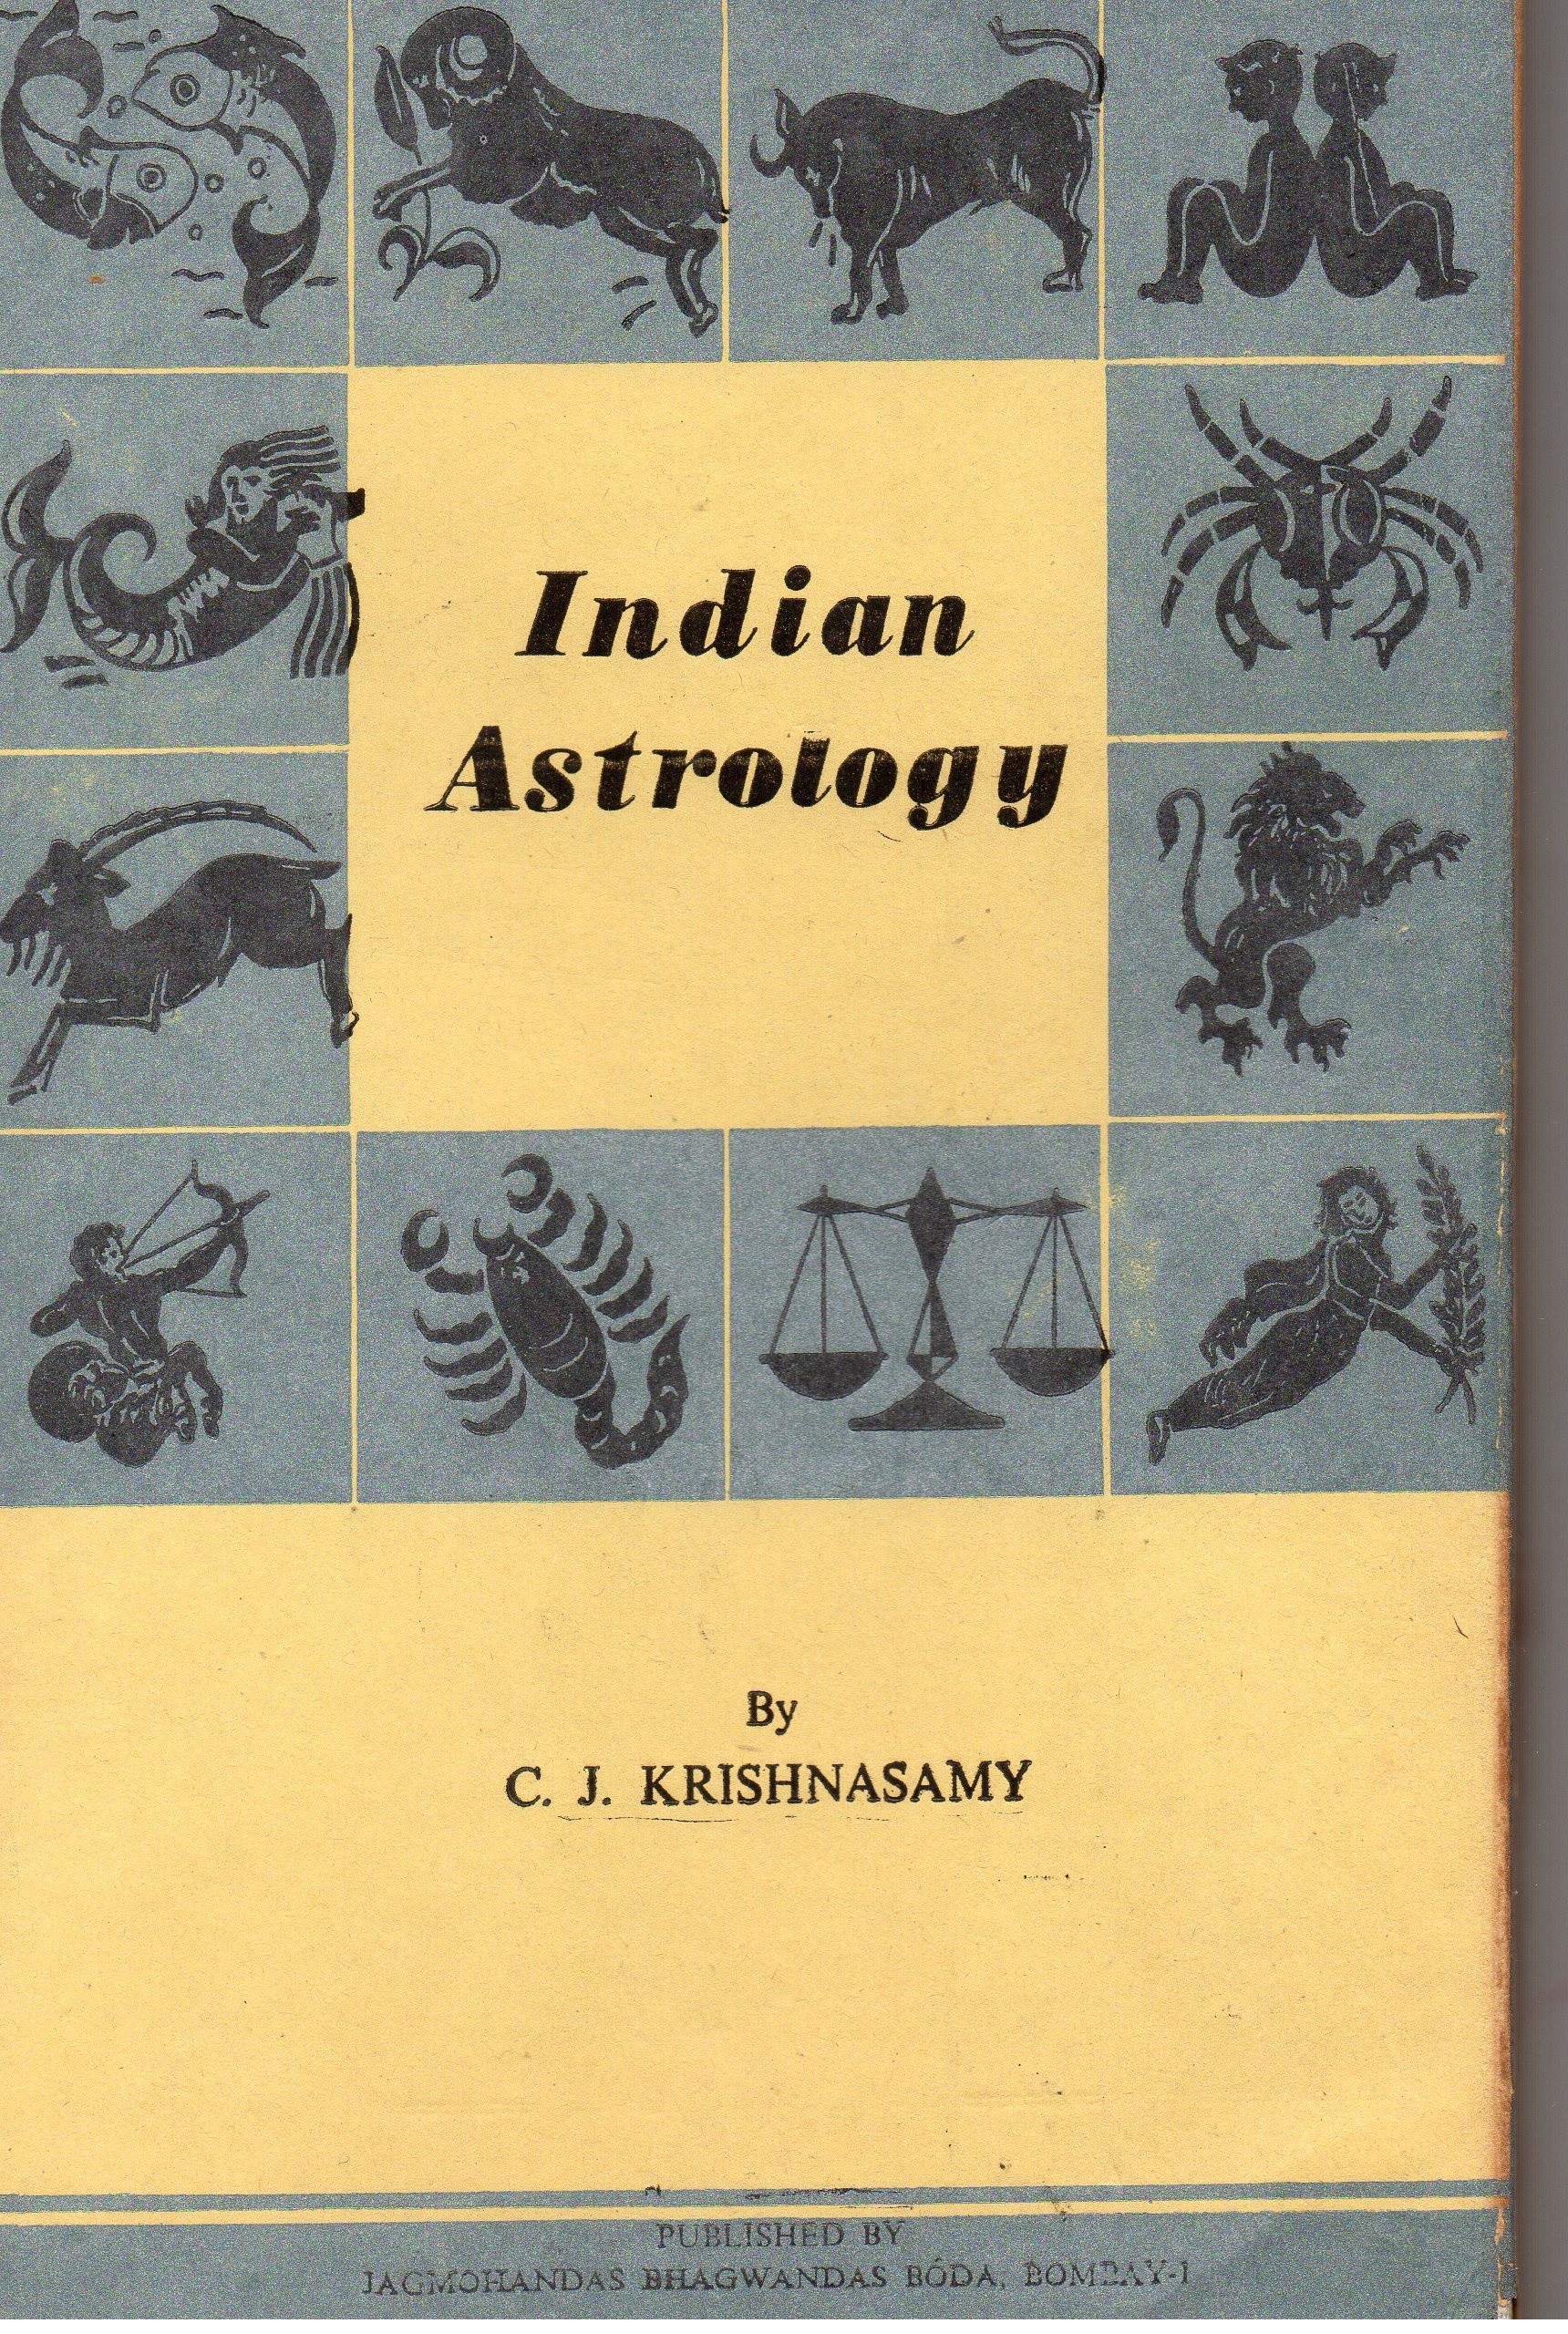 secrets of nadi astrology by s.ravi free download